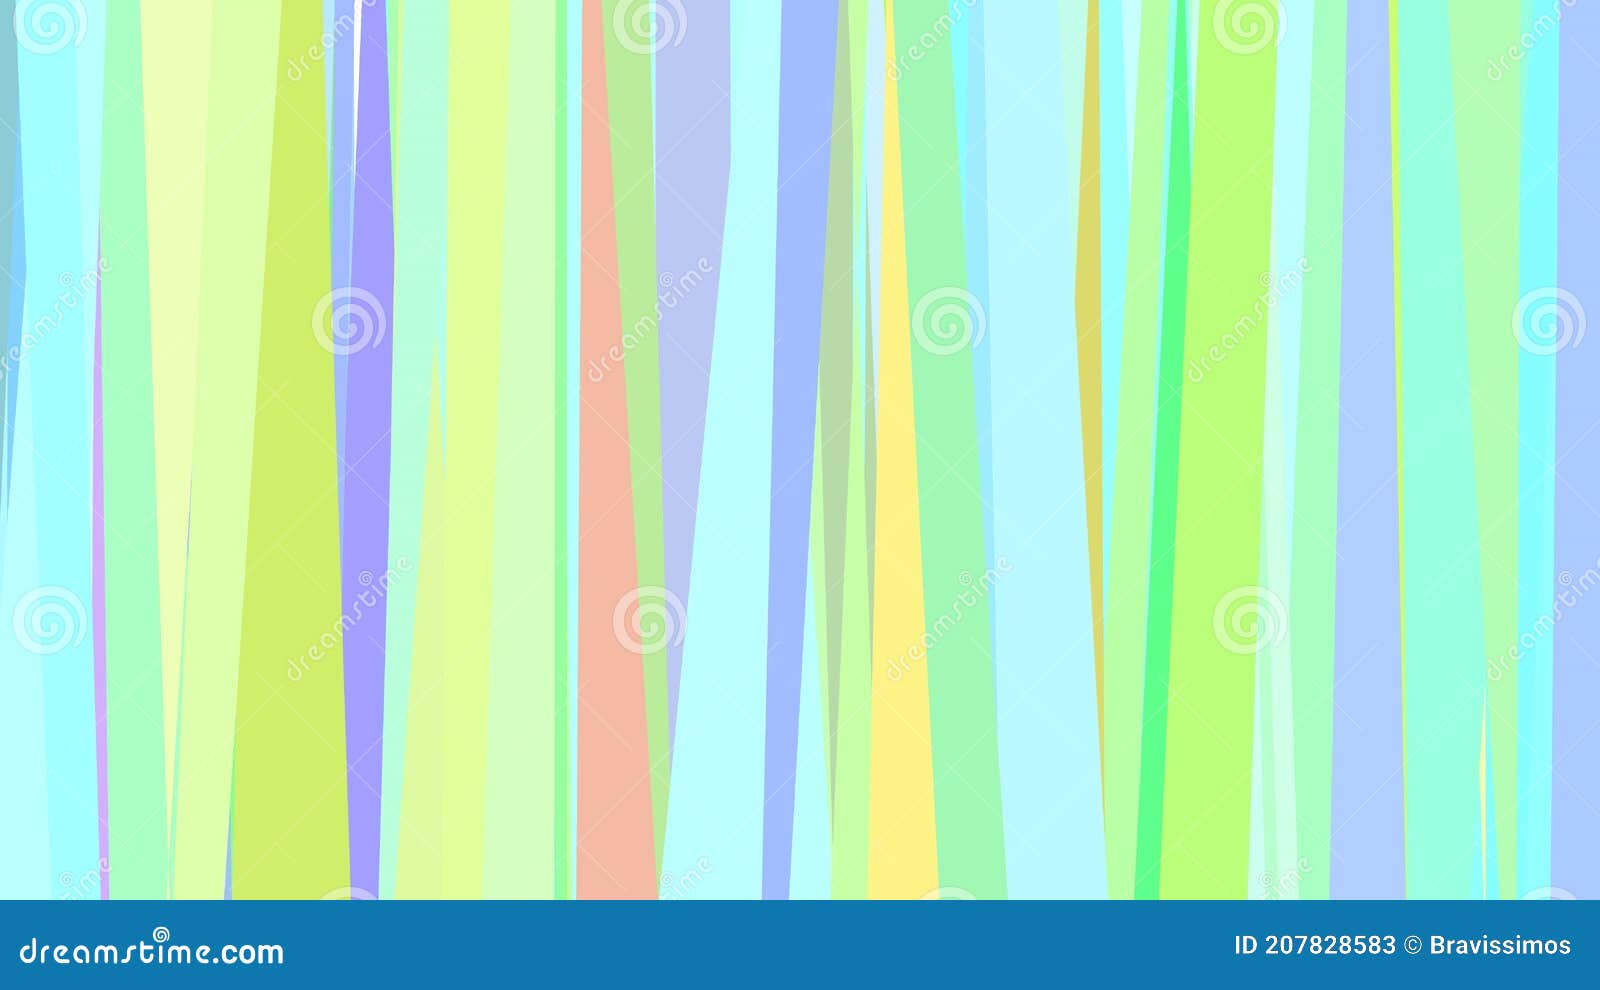 vertical line background color stripe.   neon irridescent